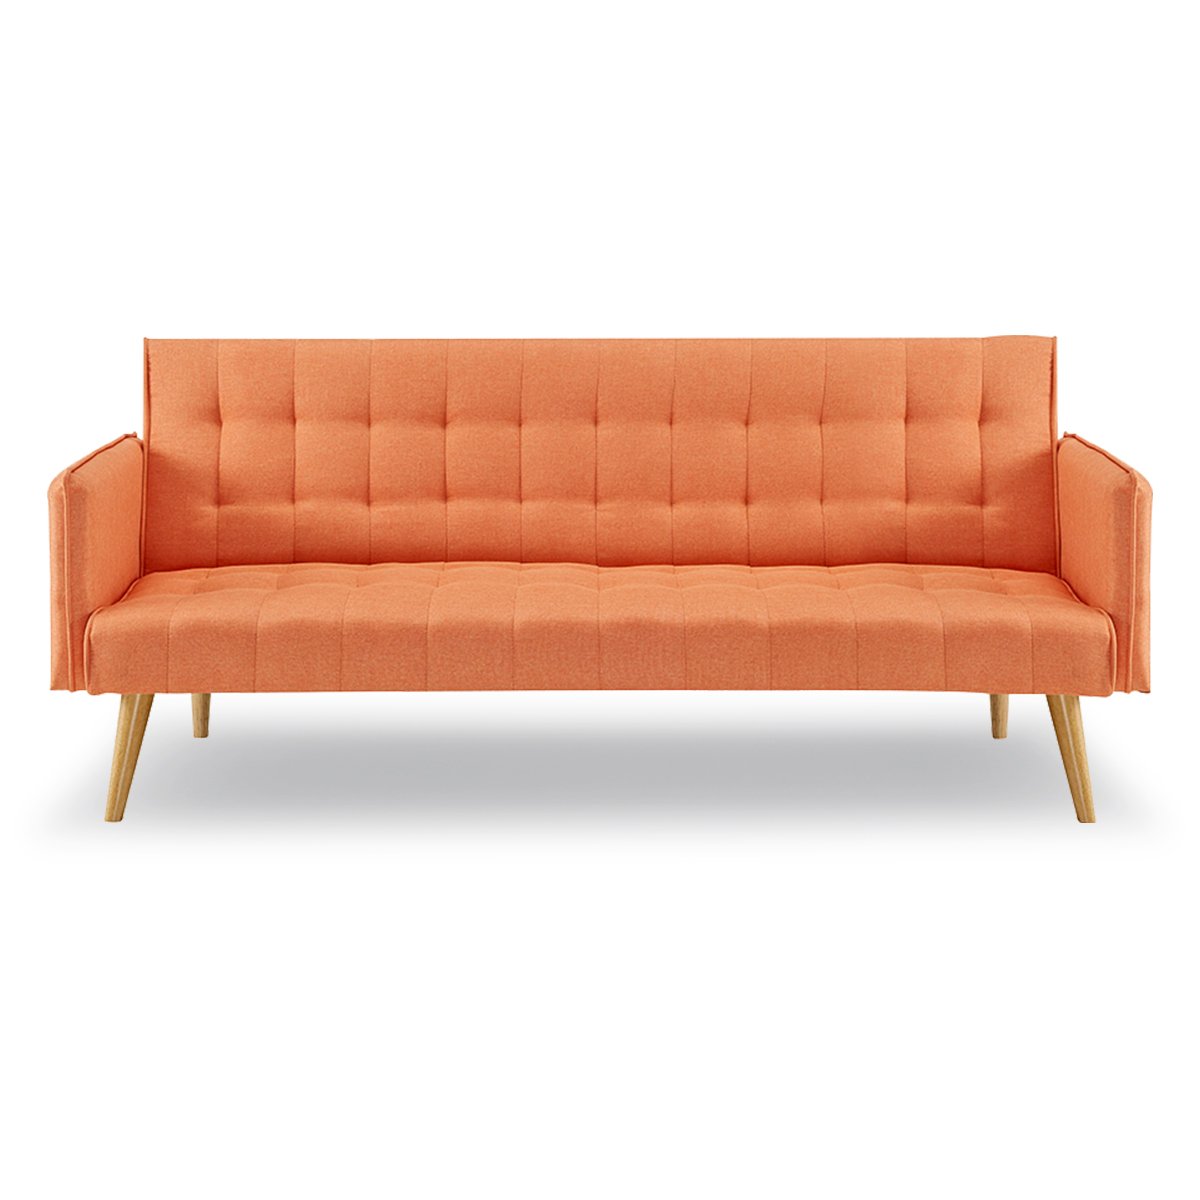 Sarantino 3 Seater Modular Linen Fabric Sofa Bed Couch Armrest Orange - 0